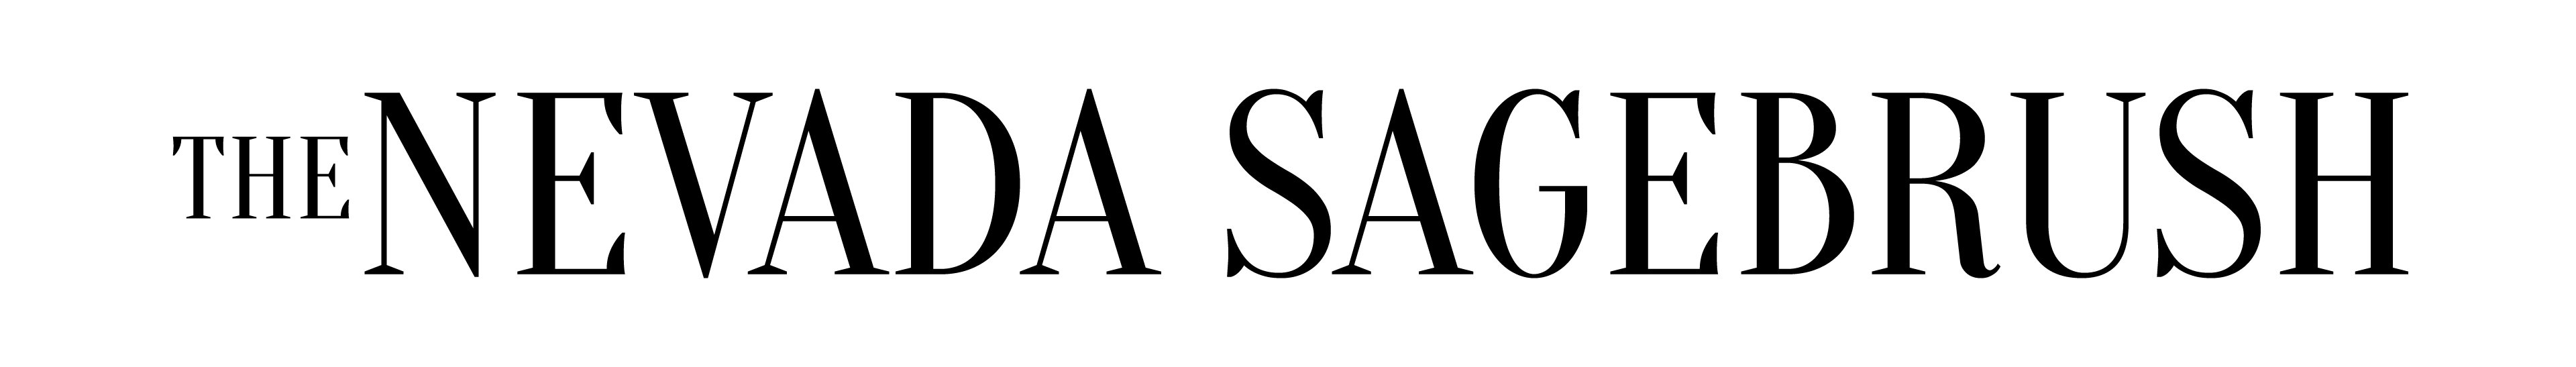 The Nevada Sagebrush Logo